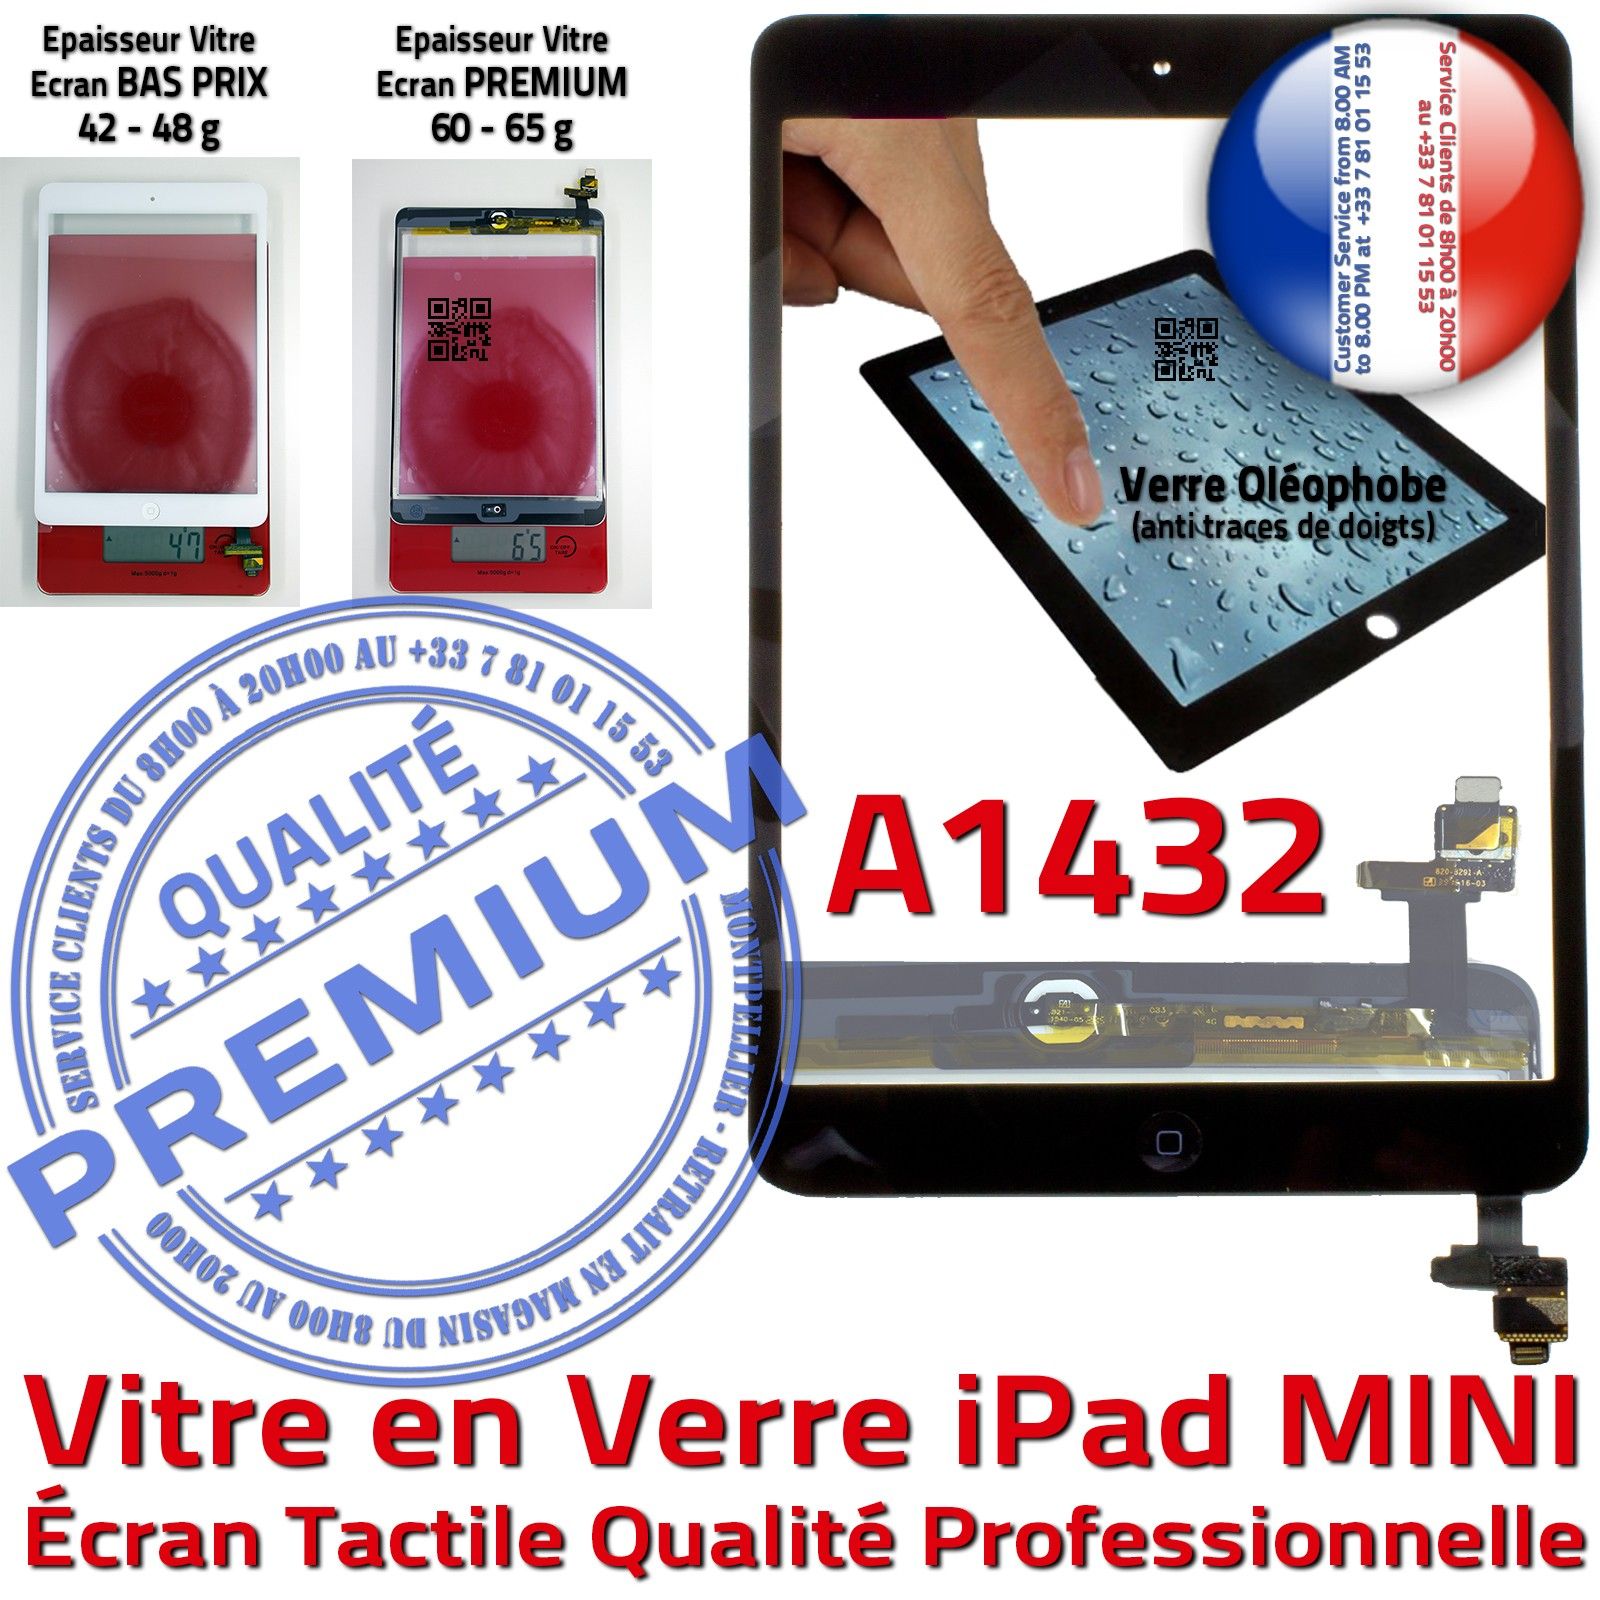 iPad AIR A1822 Verre Trempé ESR Protection Vitre Ecran Incassable